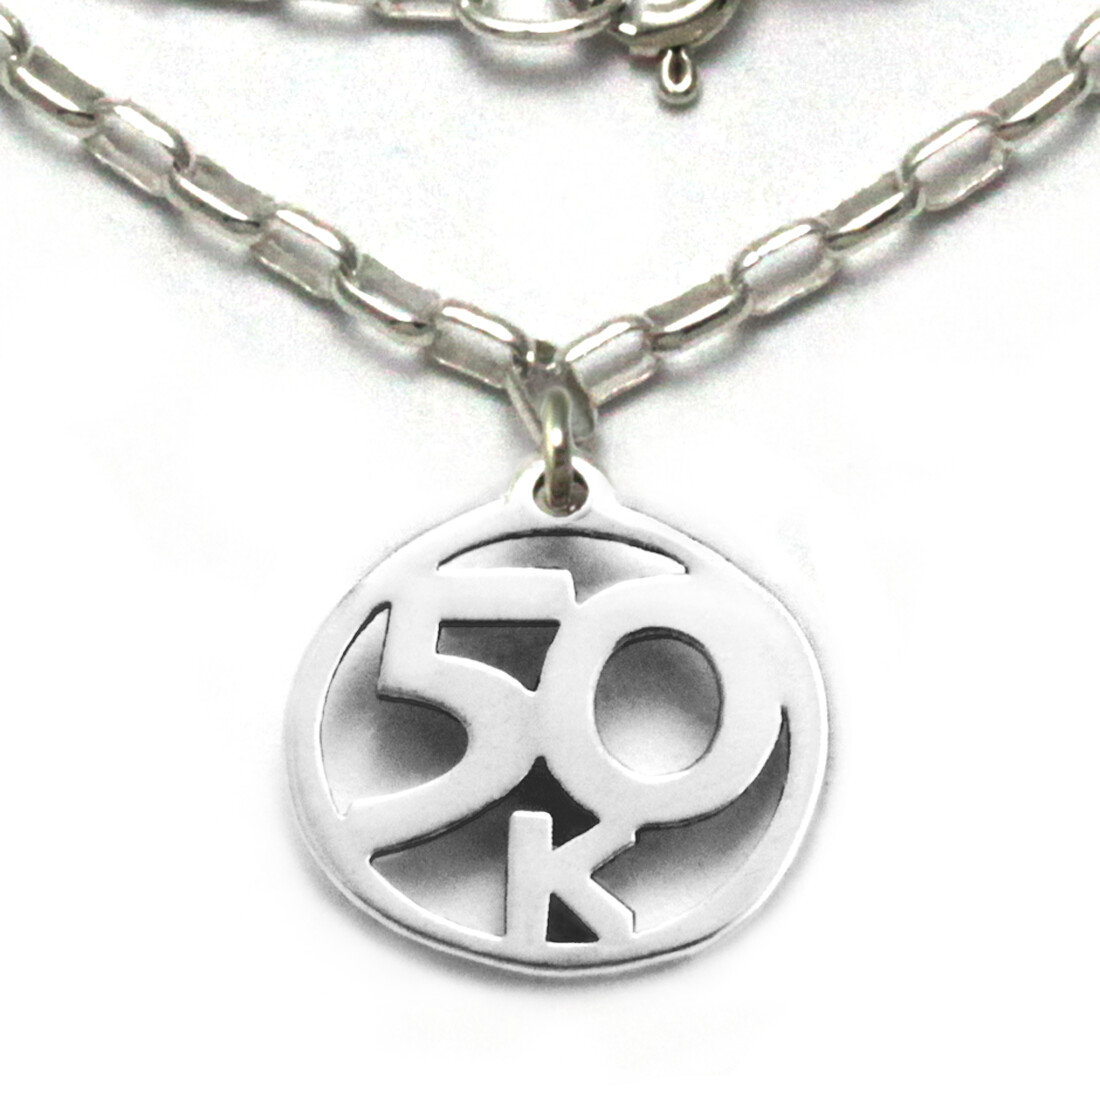 50k Necklace Sterling Silver